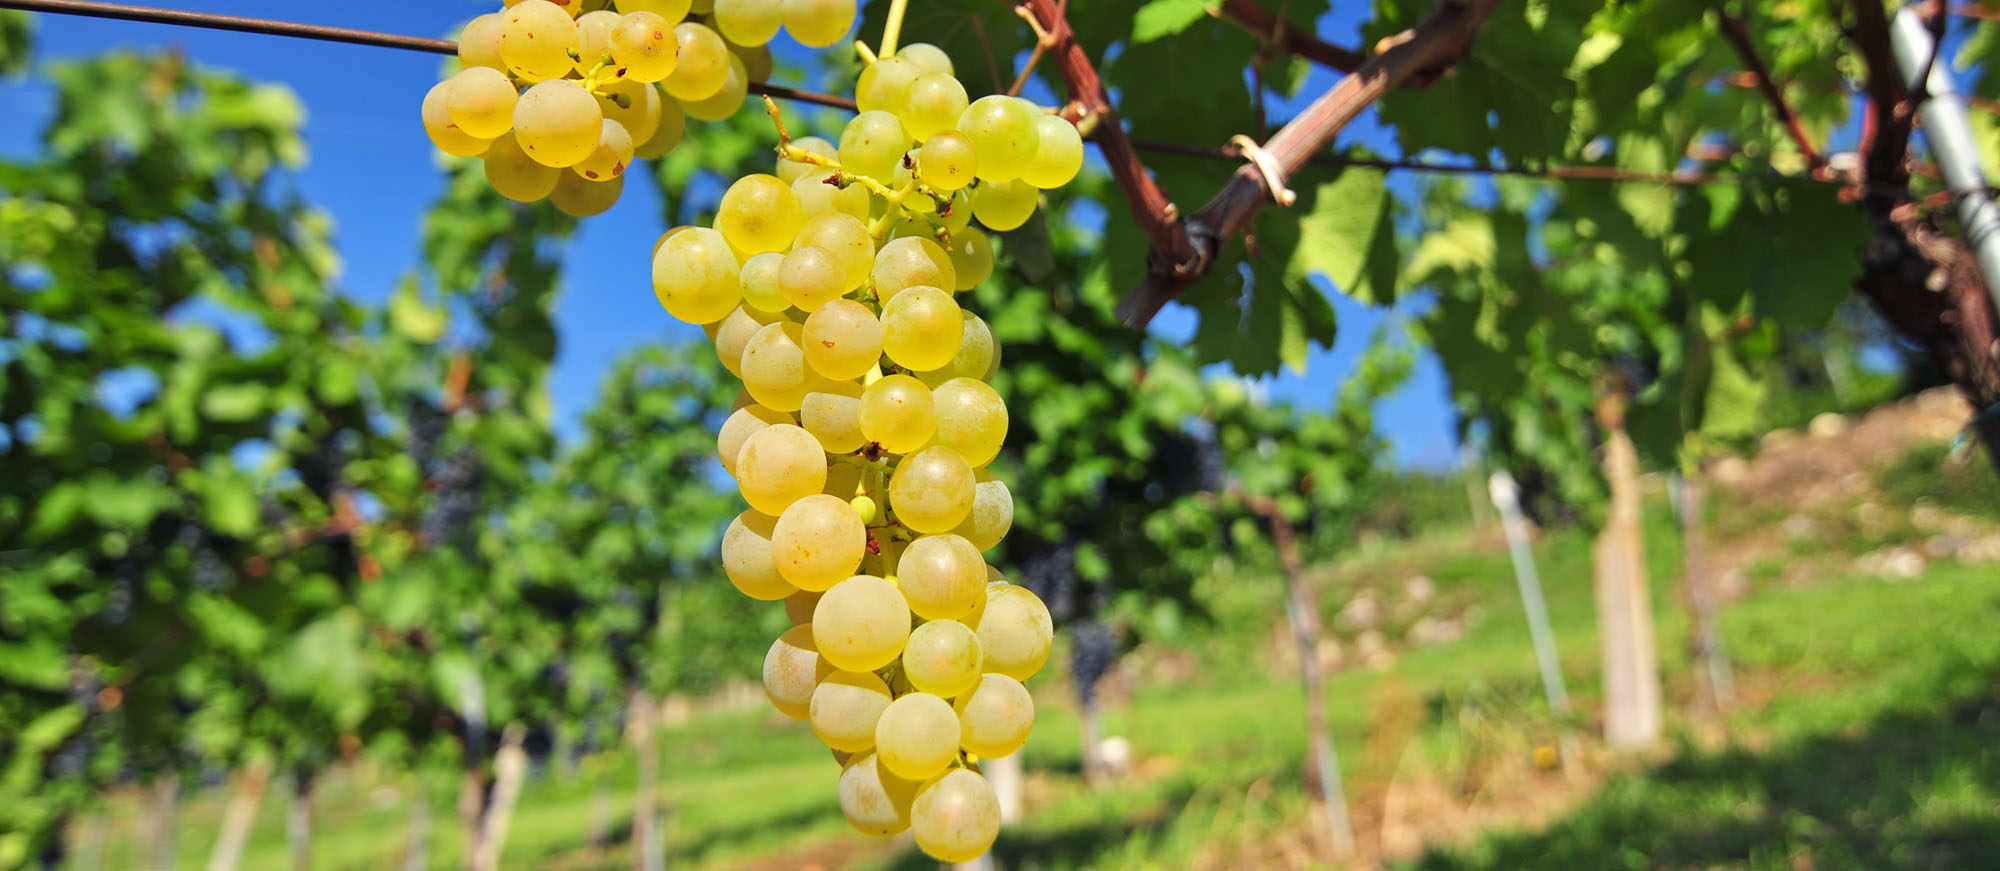 6 Most Popular Western European Grapes - TasteAtlas